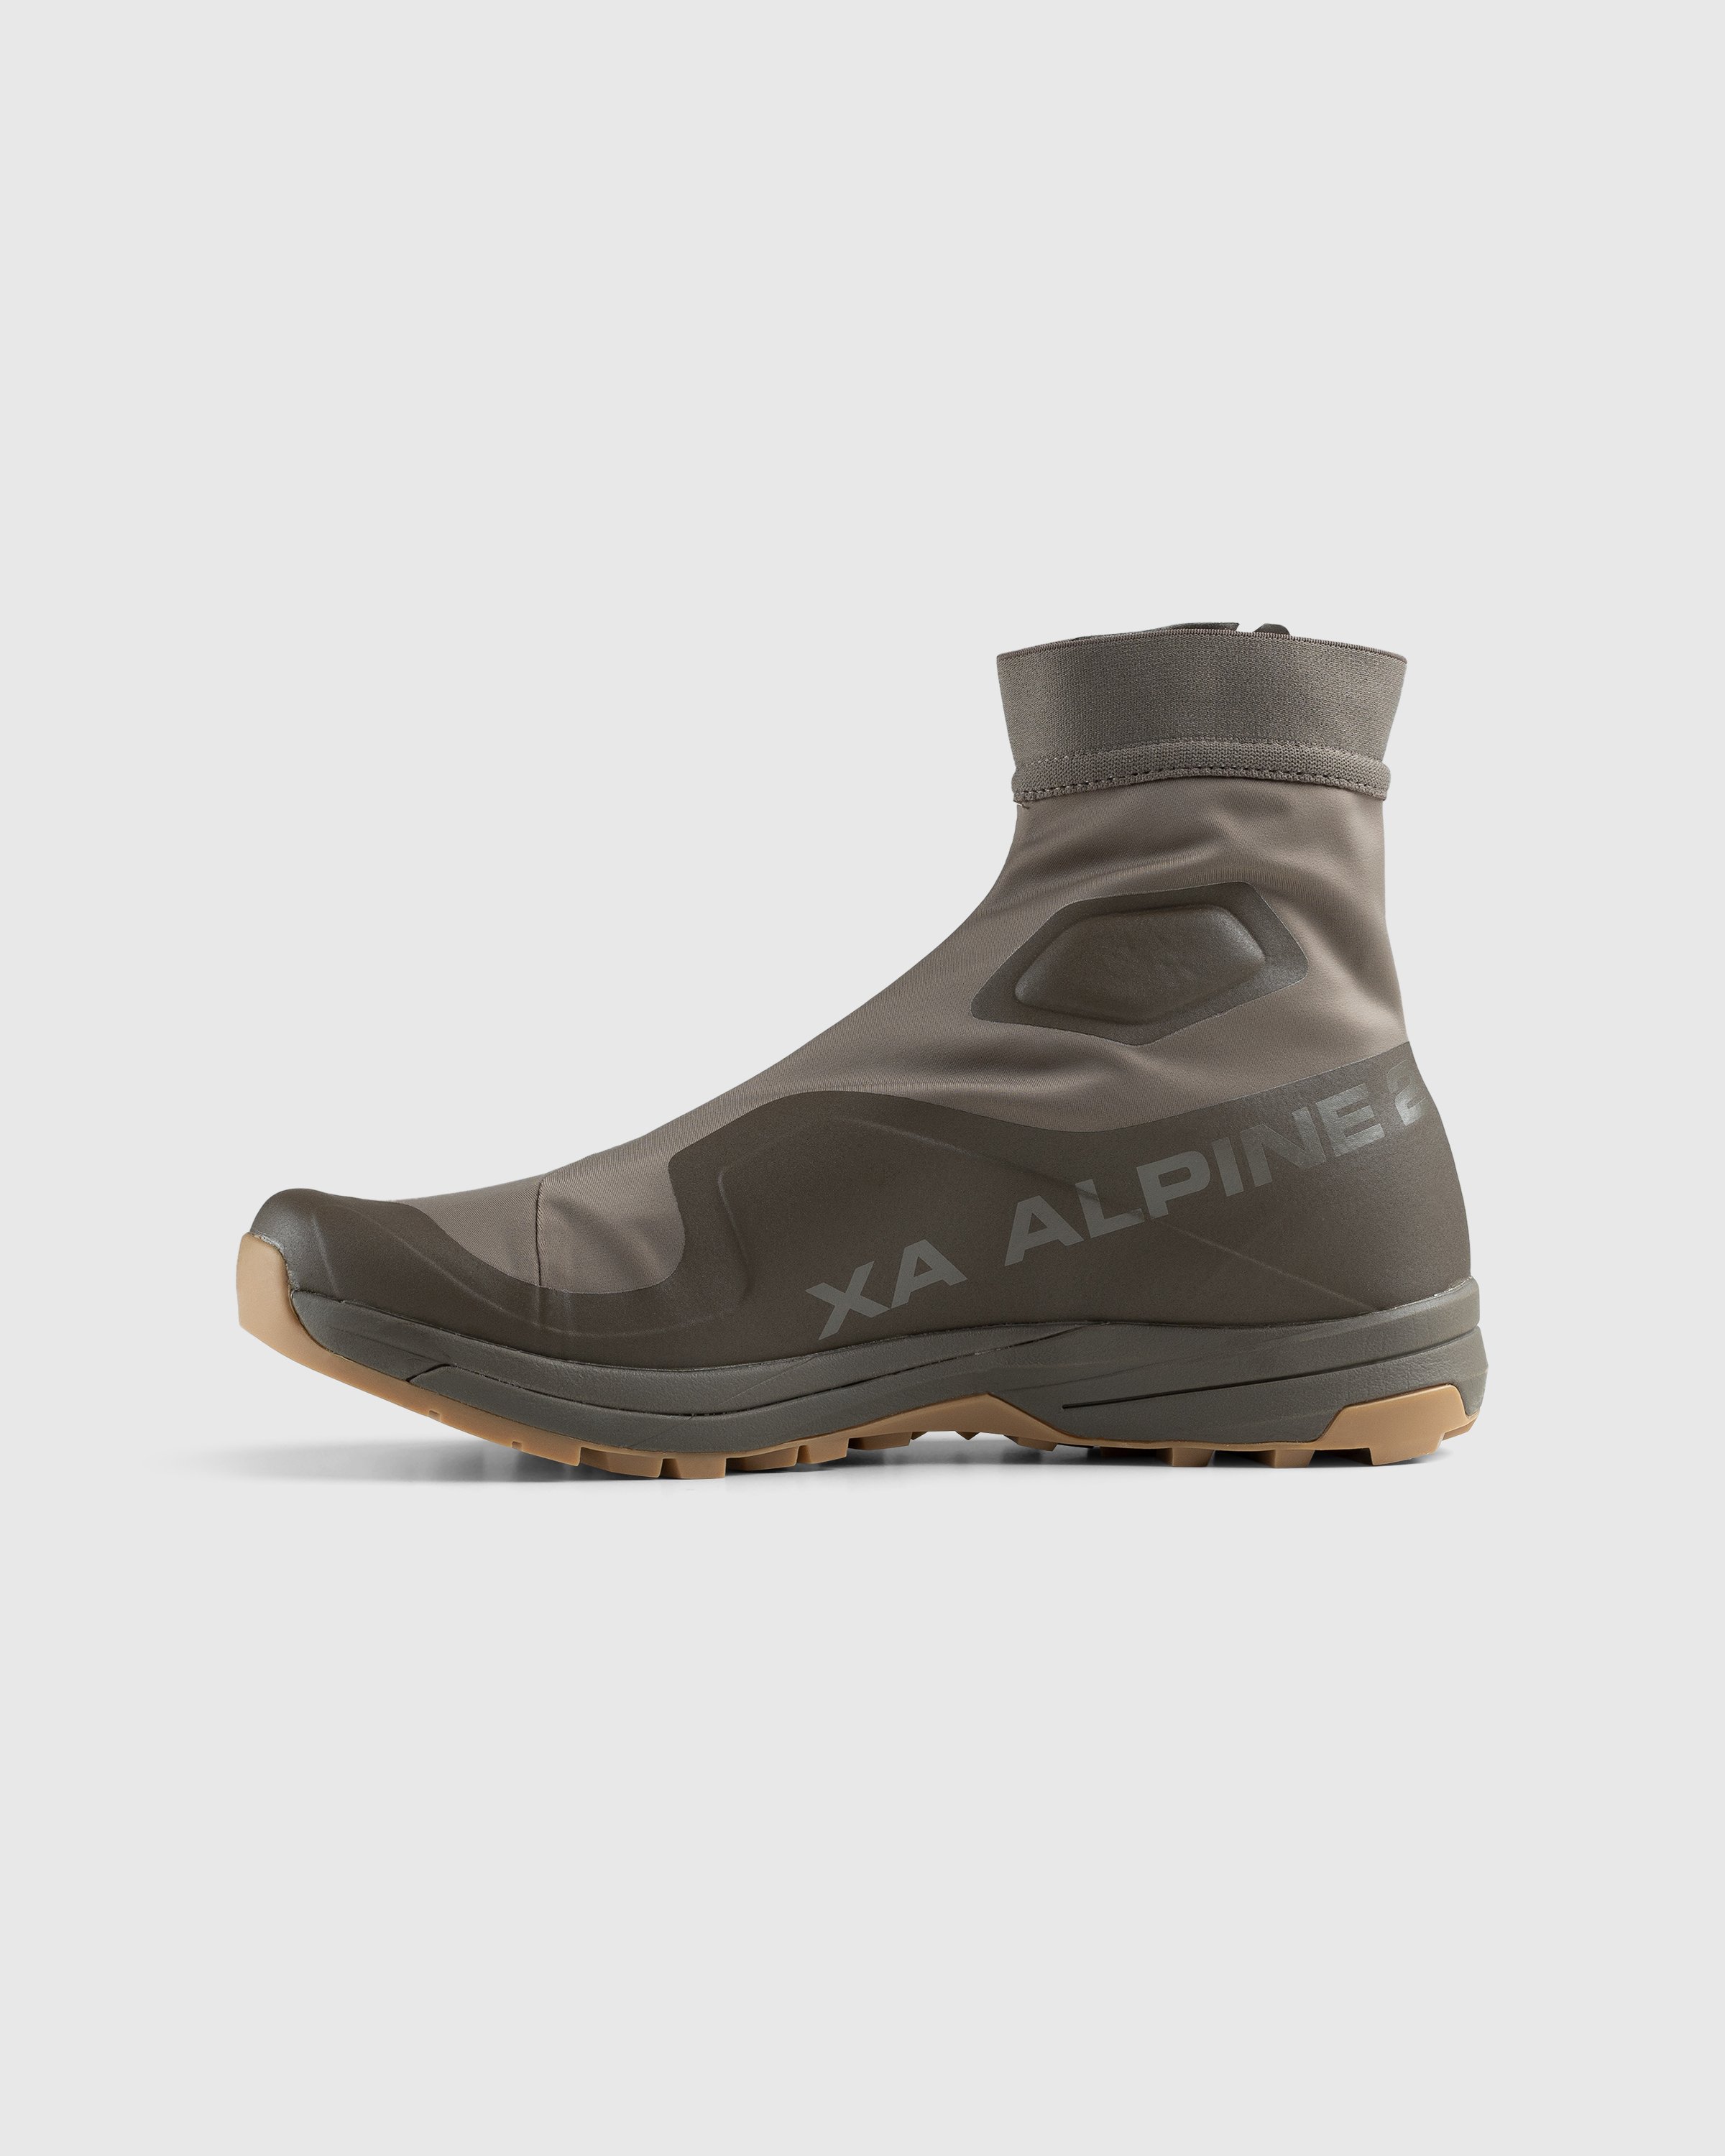 Salomon x PAS NORMAL STUDIOS - XA-Alpine 2 Moss Gray/Deep Lichen Green/Gull - Footwear - Brown - Image 2